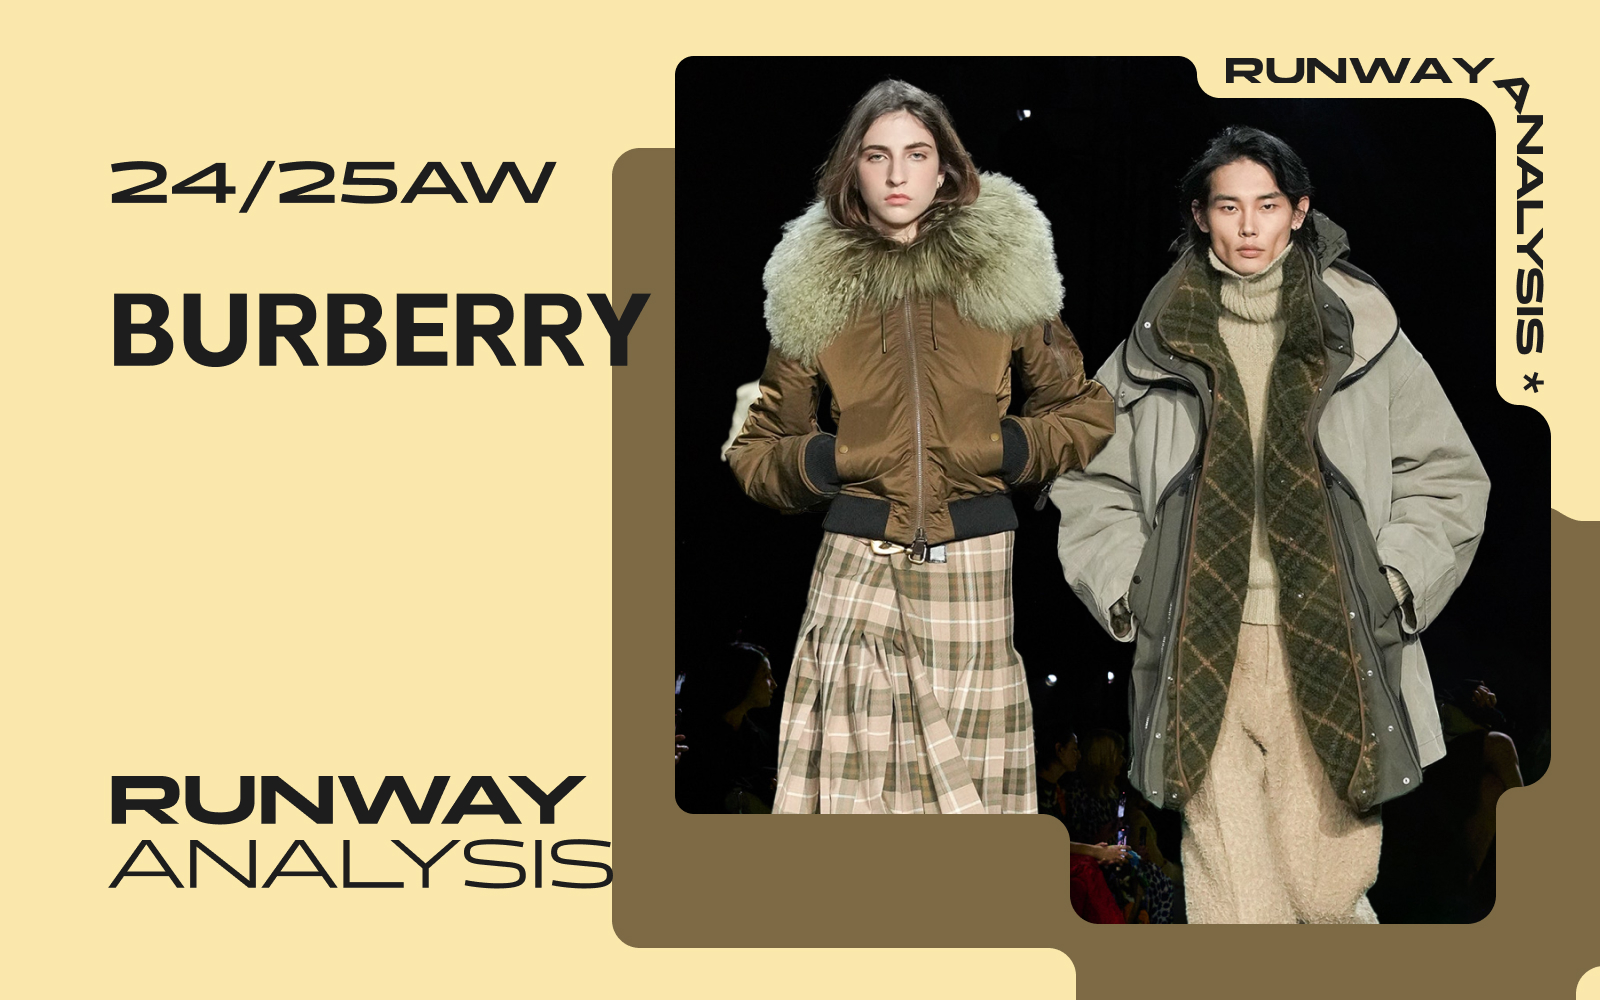 British Outdoor -- The Runway Analysis of Burberry